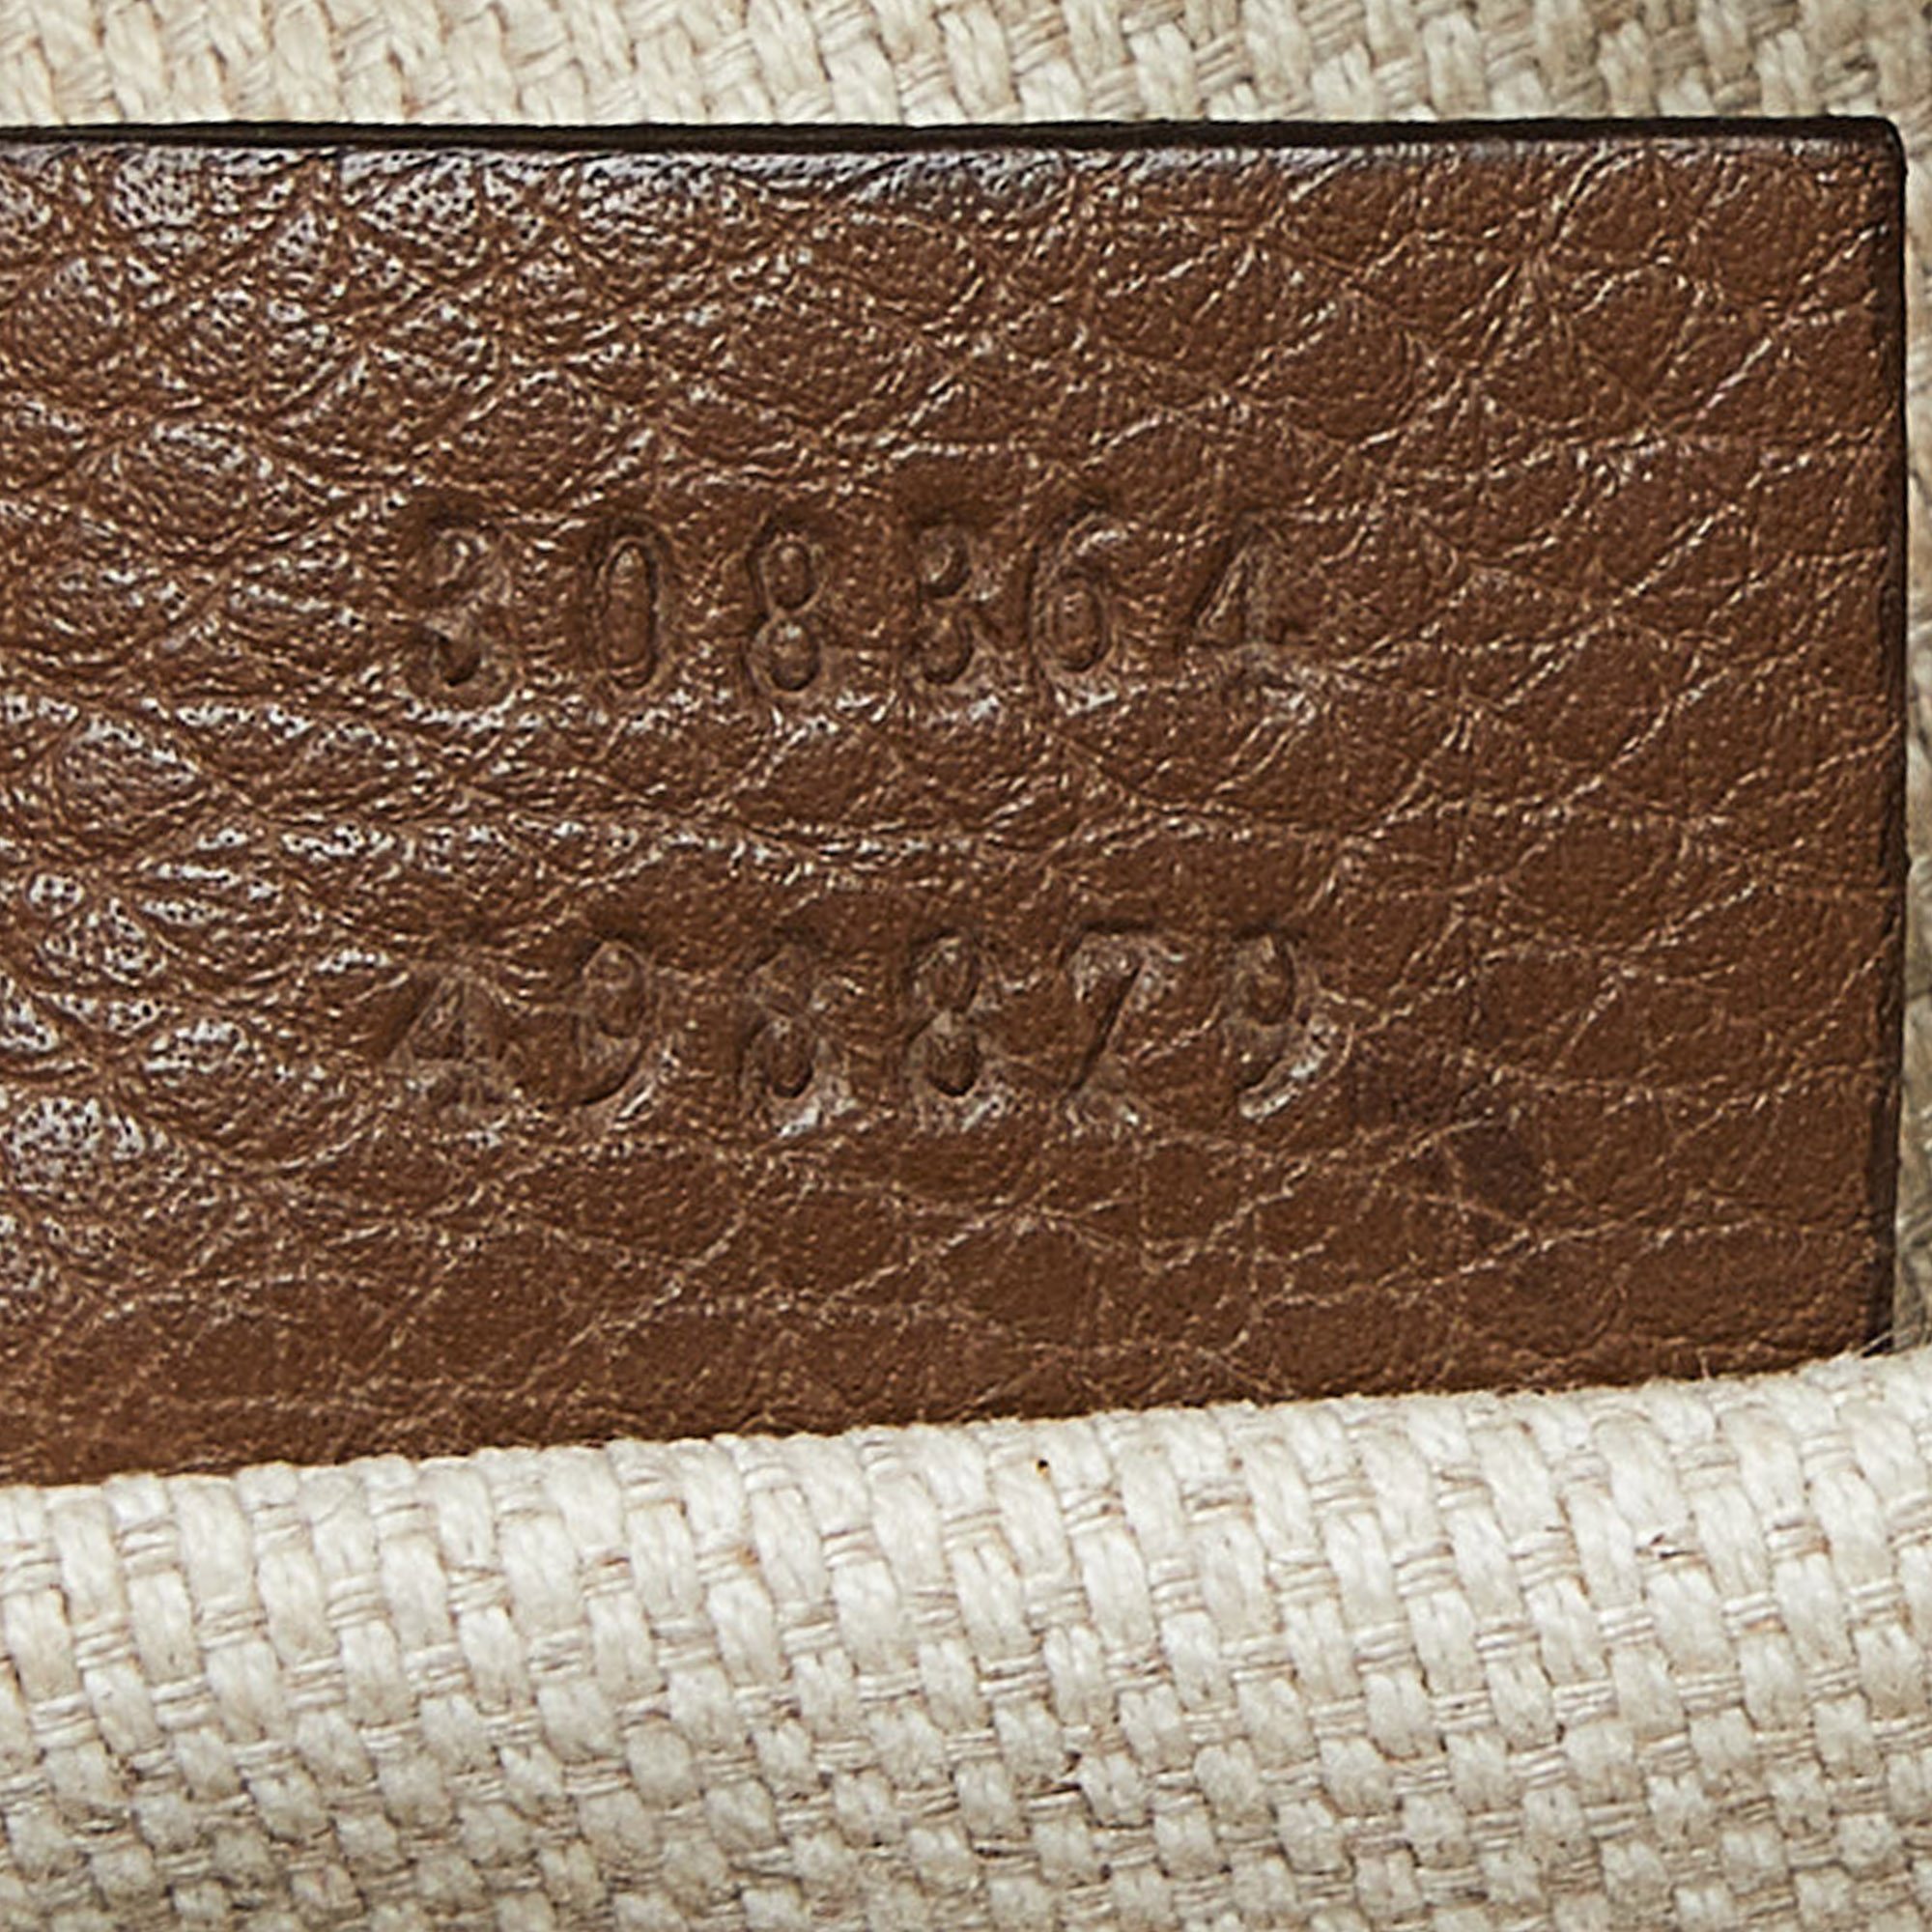 Gucci Brown Leather Small Soho Disco Crossbody Bag